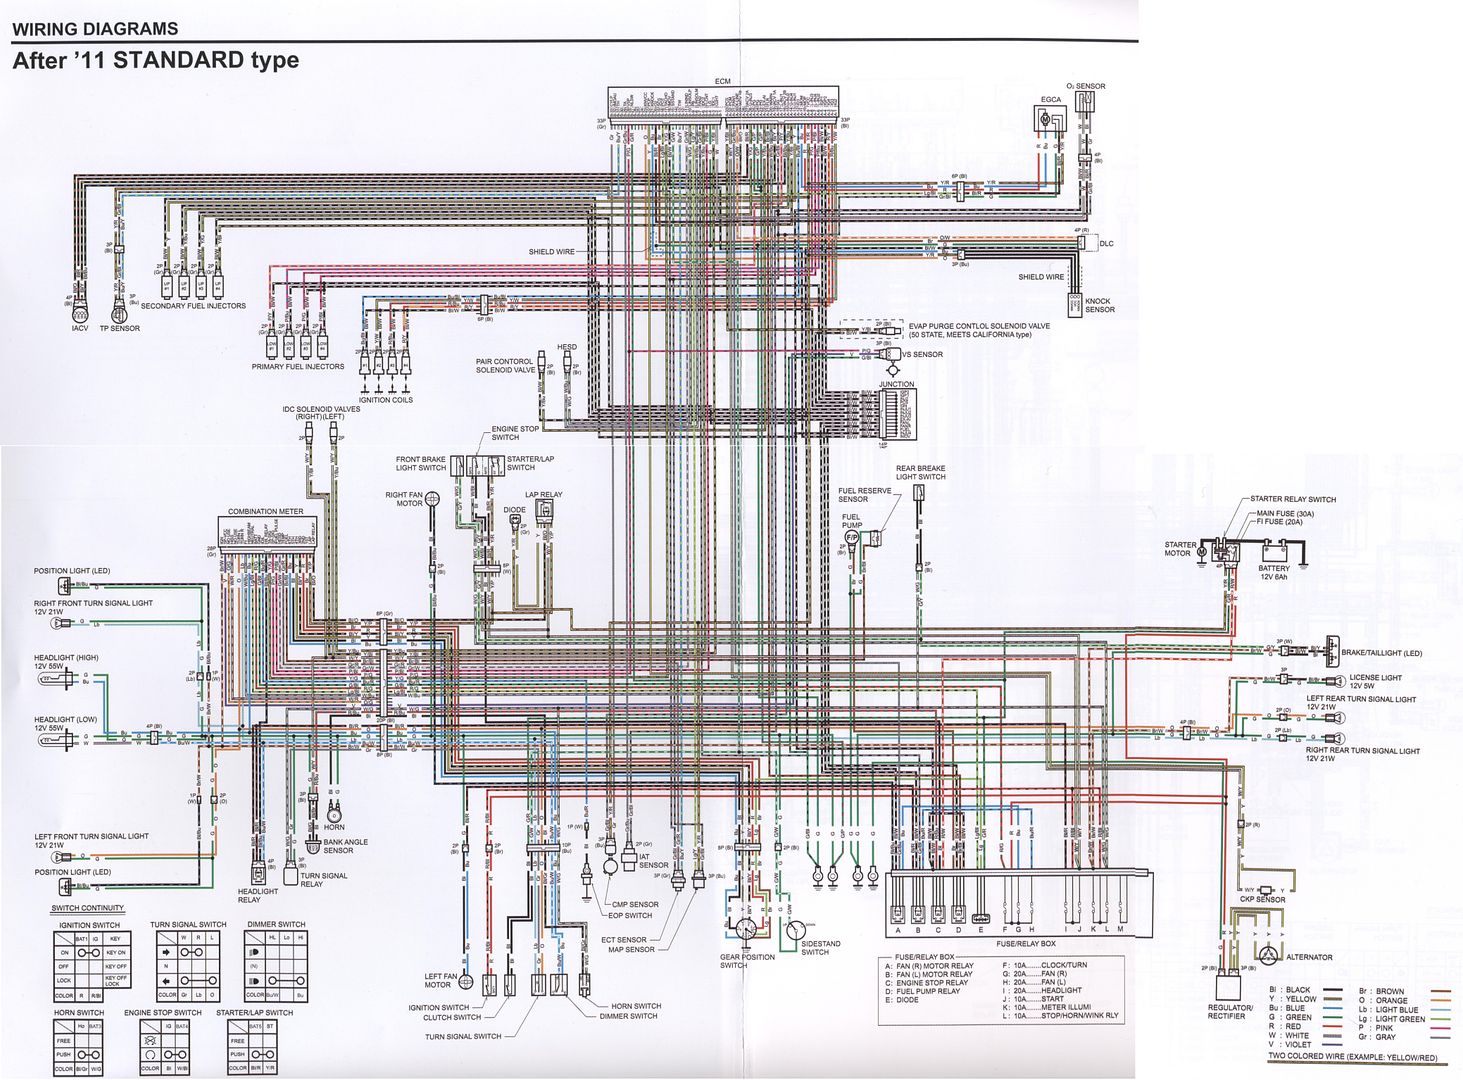 [DIAGRAM] Honda Cbr1000rr 2008 Wiring Diagram FULL Version HD Quality